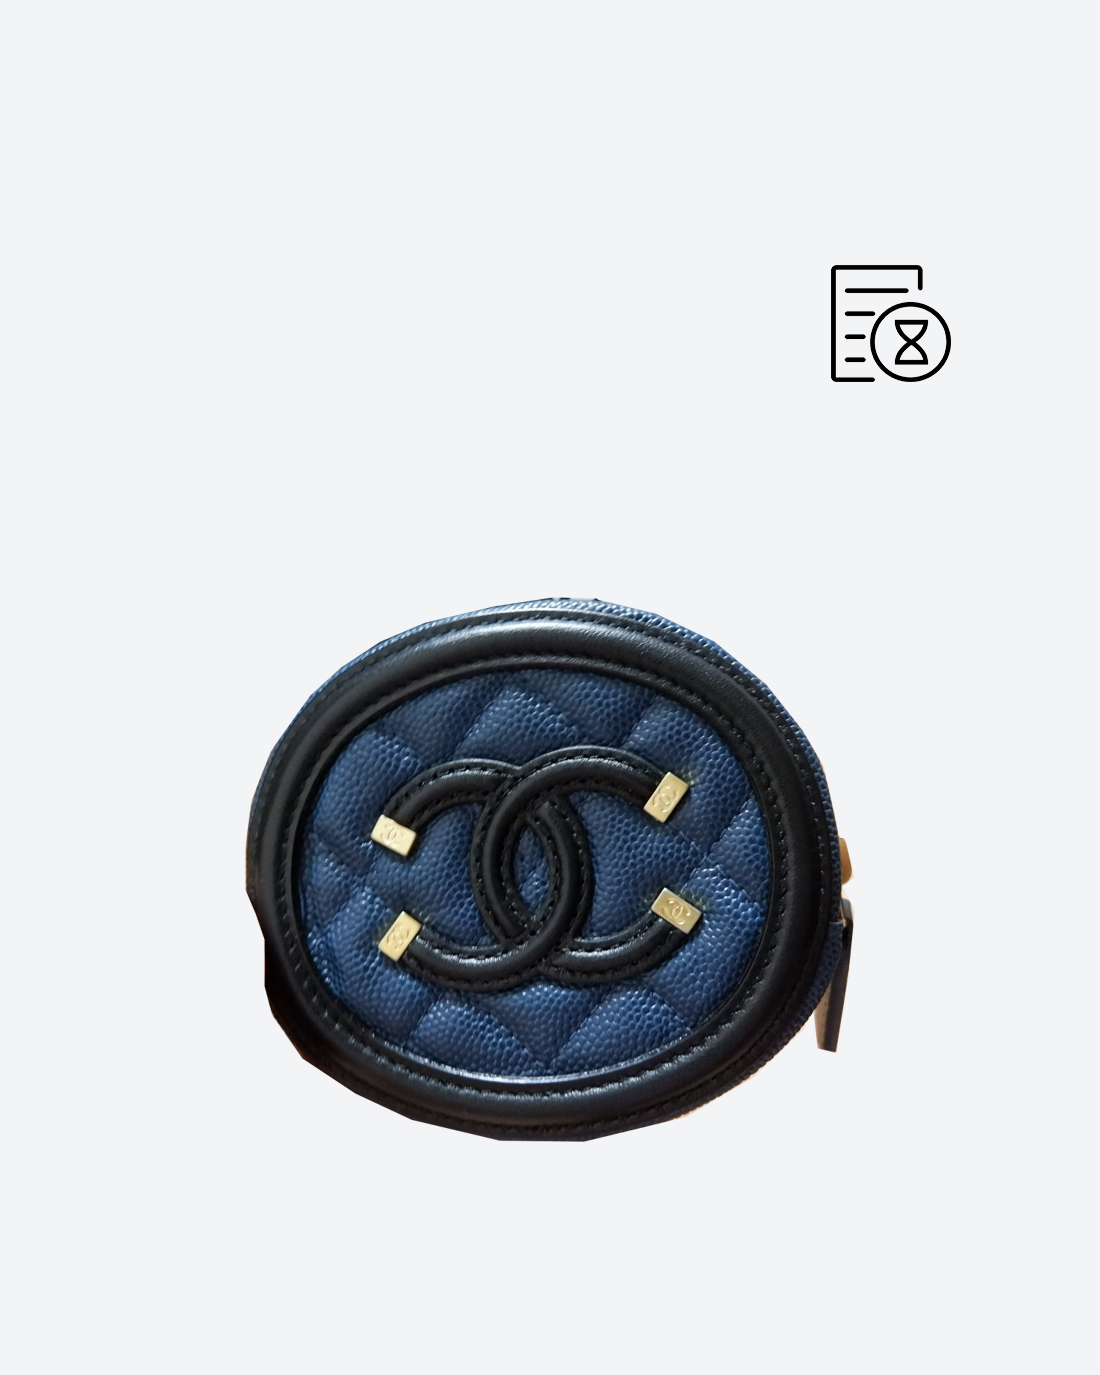 Chanel round wallet